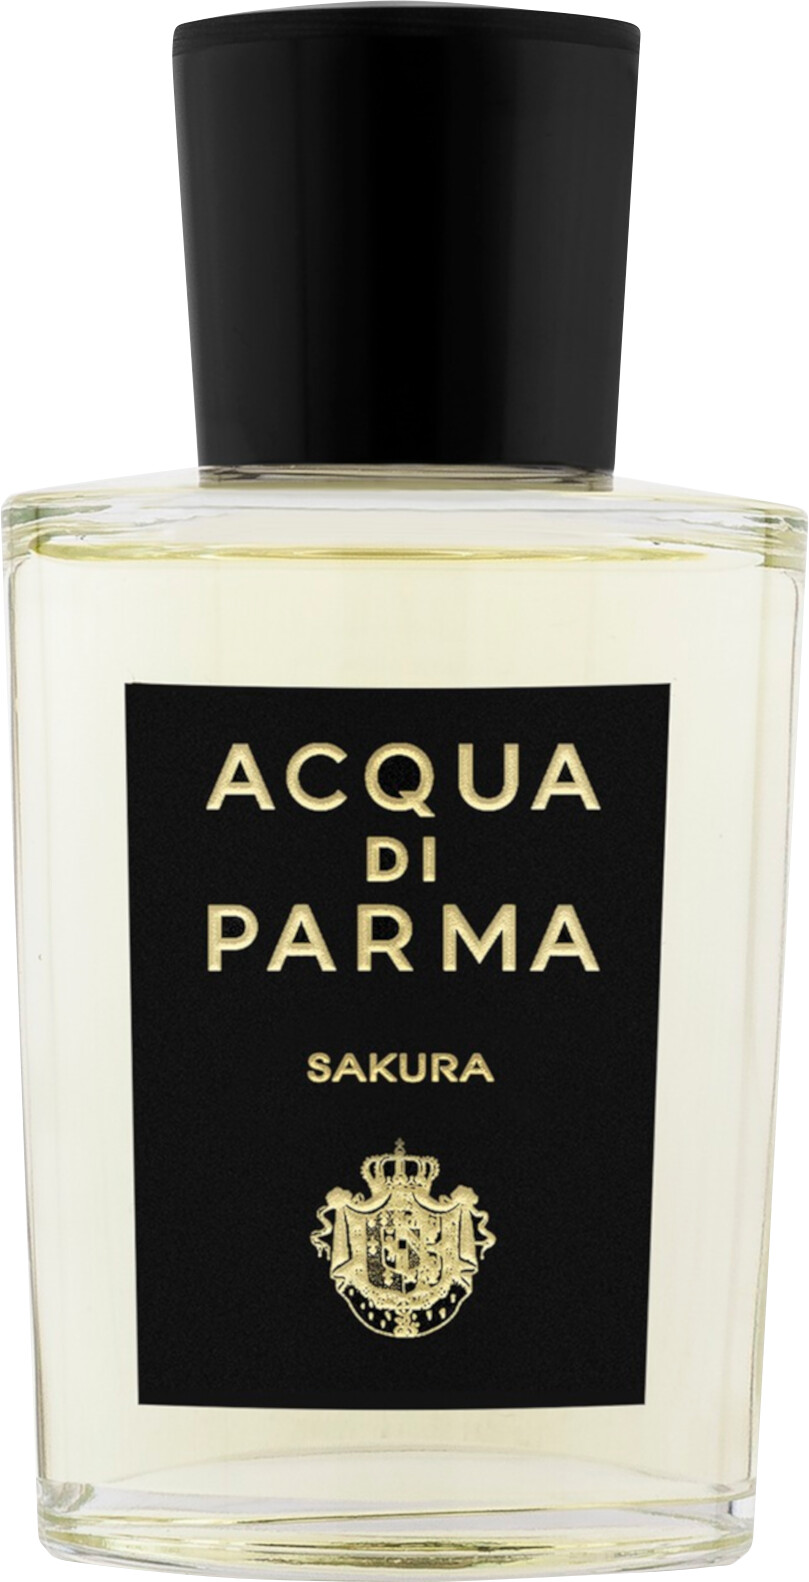 Acqua di Parma Sakura Eau de Parfum Spray 100ml